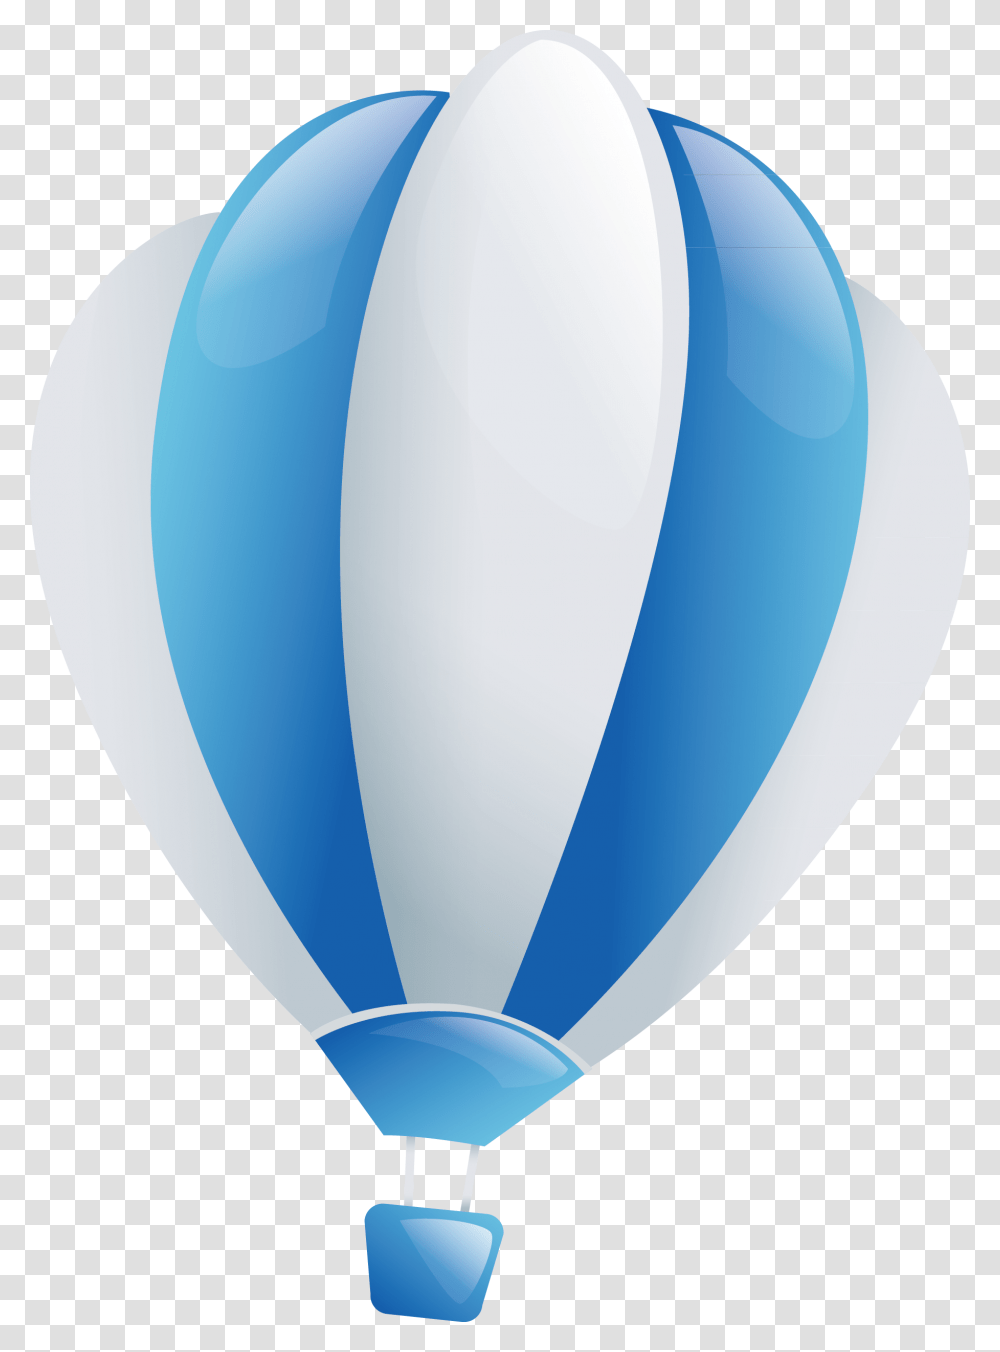 Cartoon Images Of Parachute, Balloon, Hot Air Balloon, Aircraft, Vehicle Transparent Png